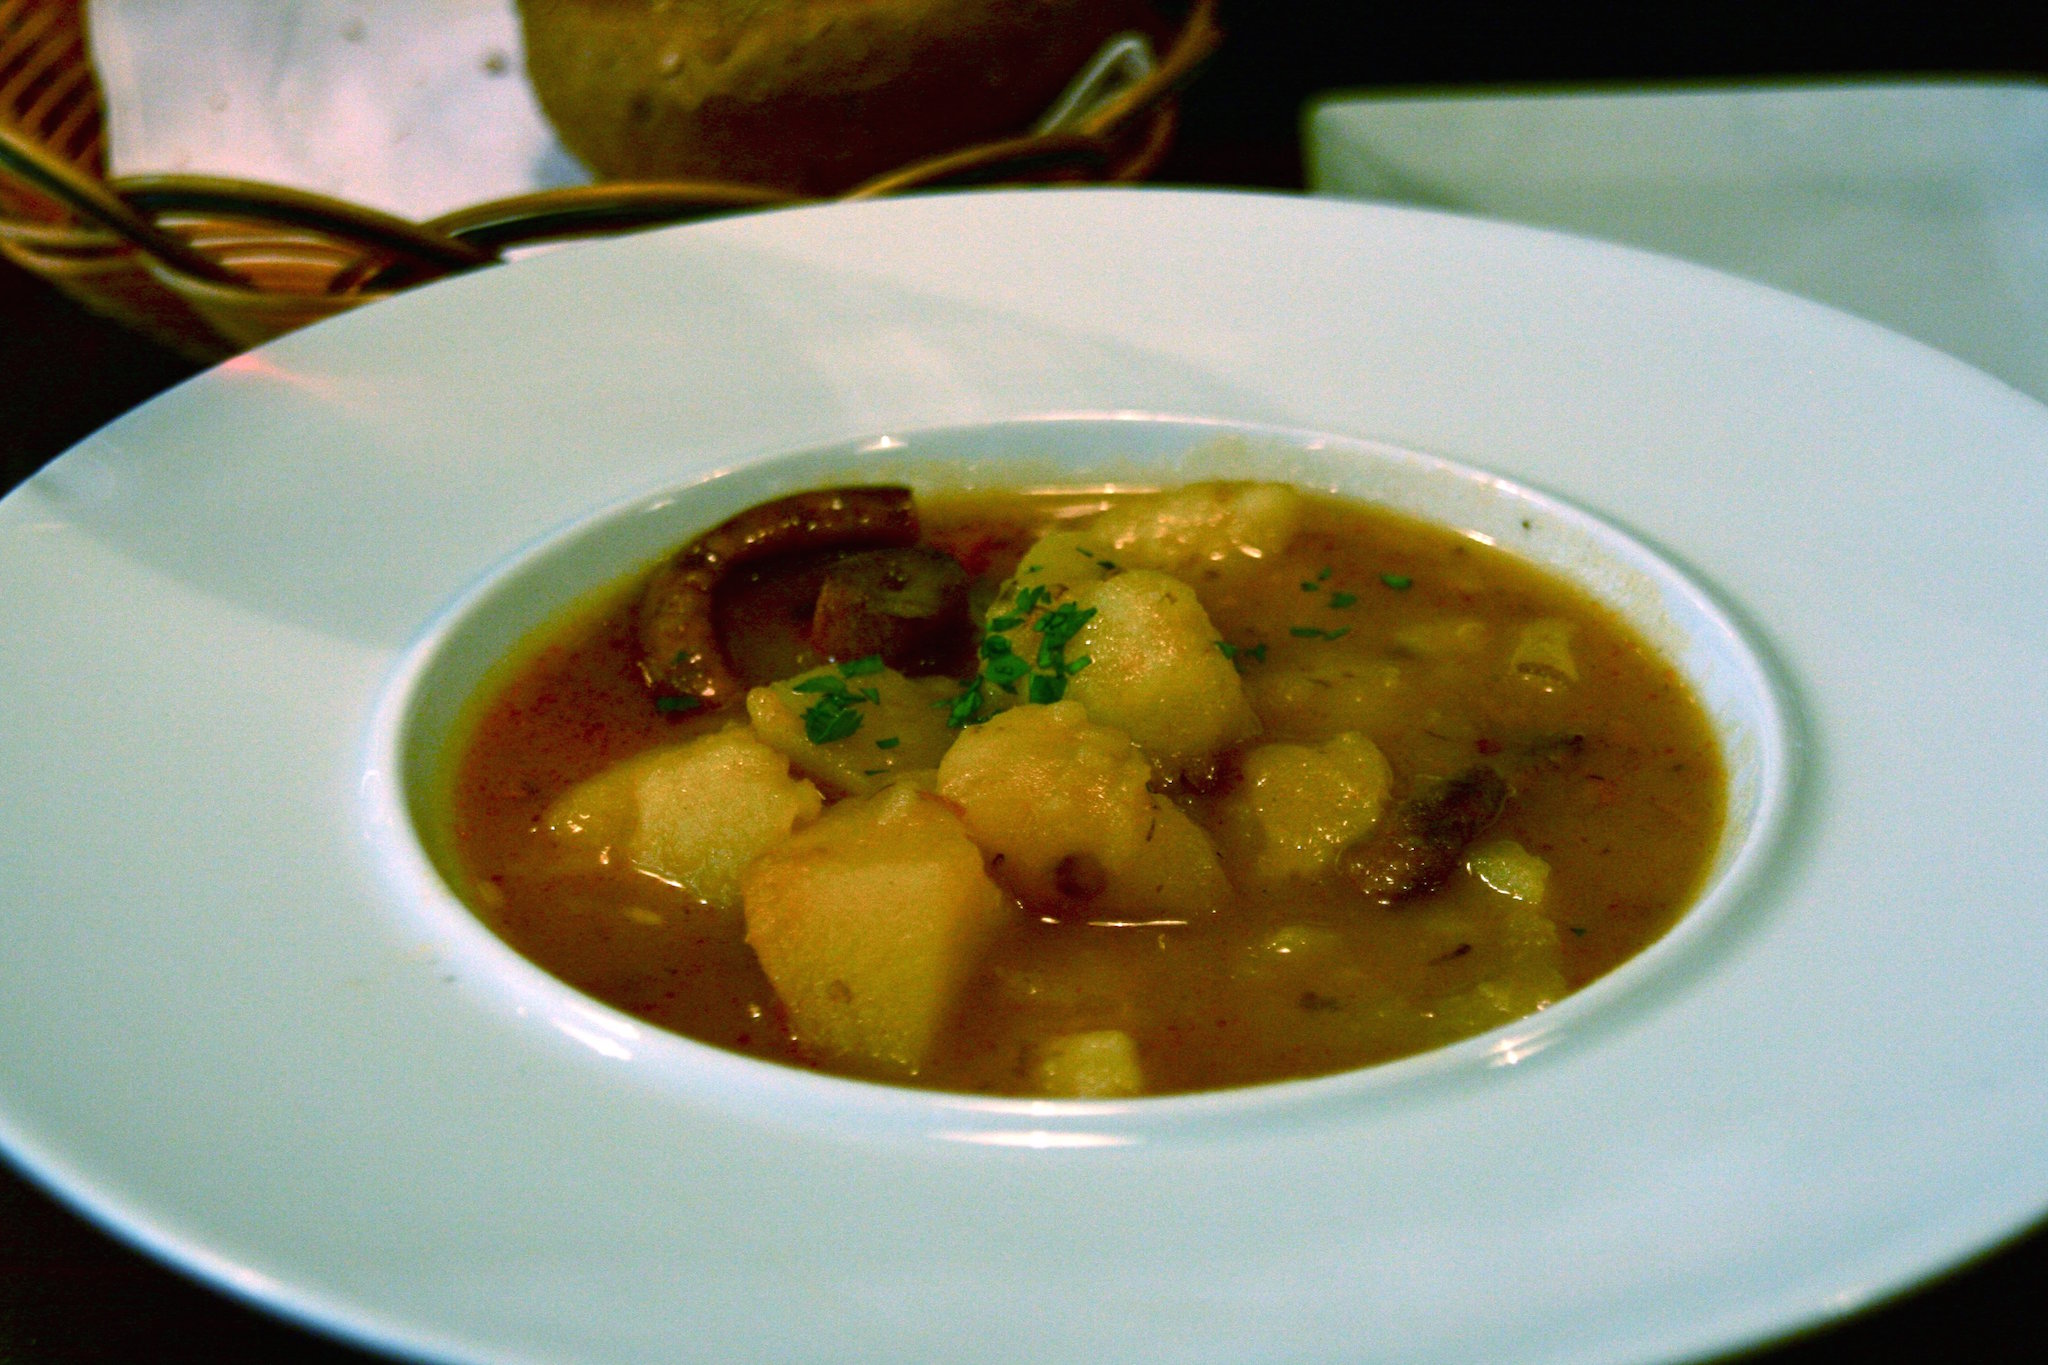 Potato and mushroom stew